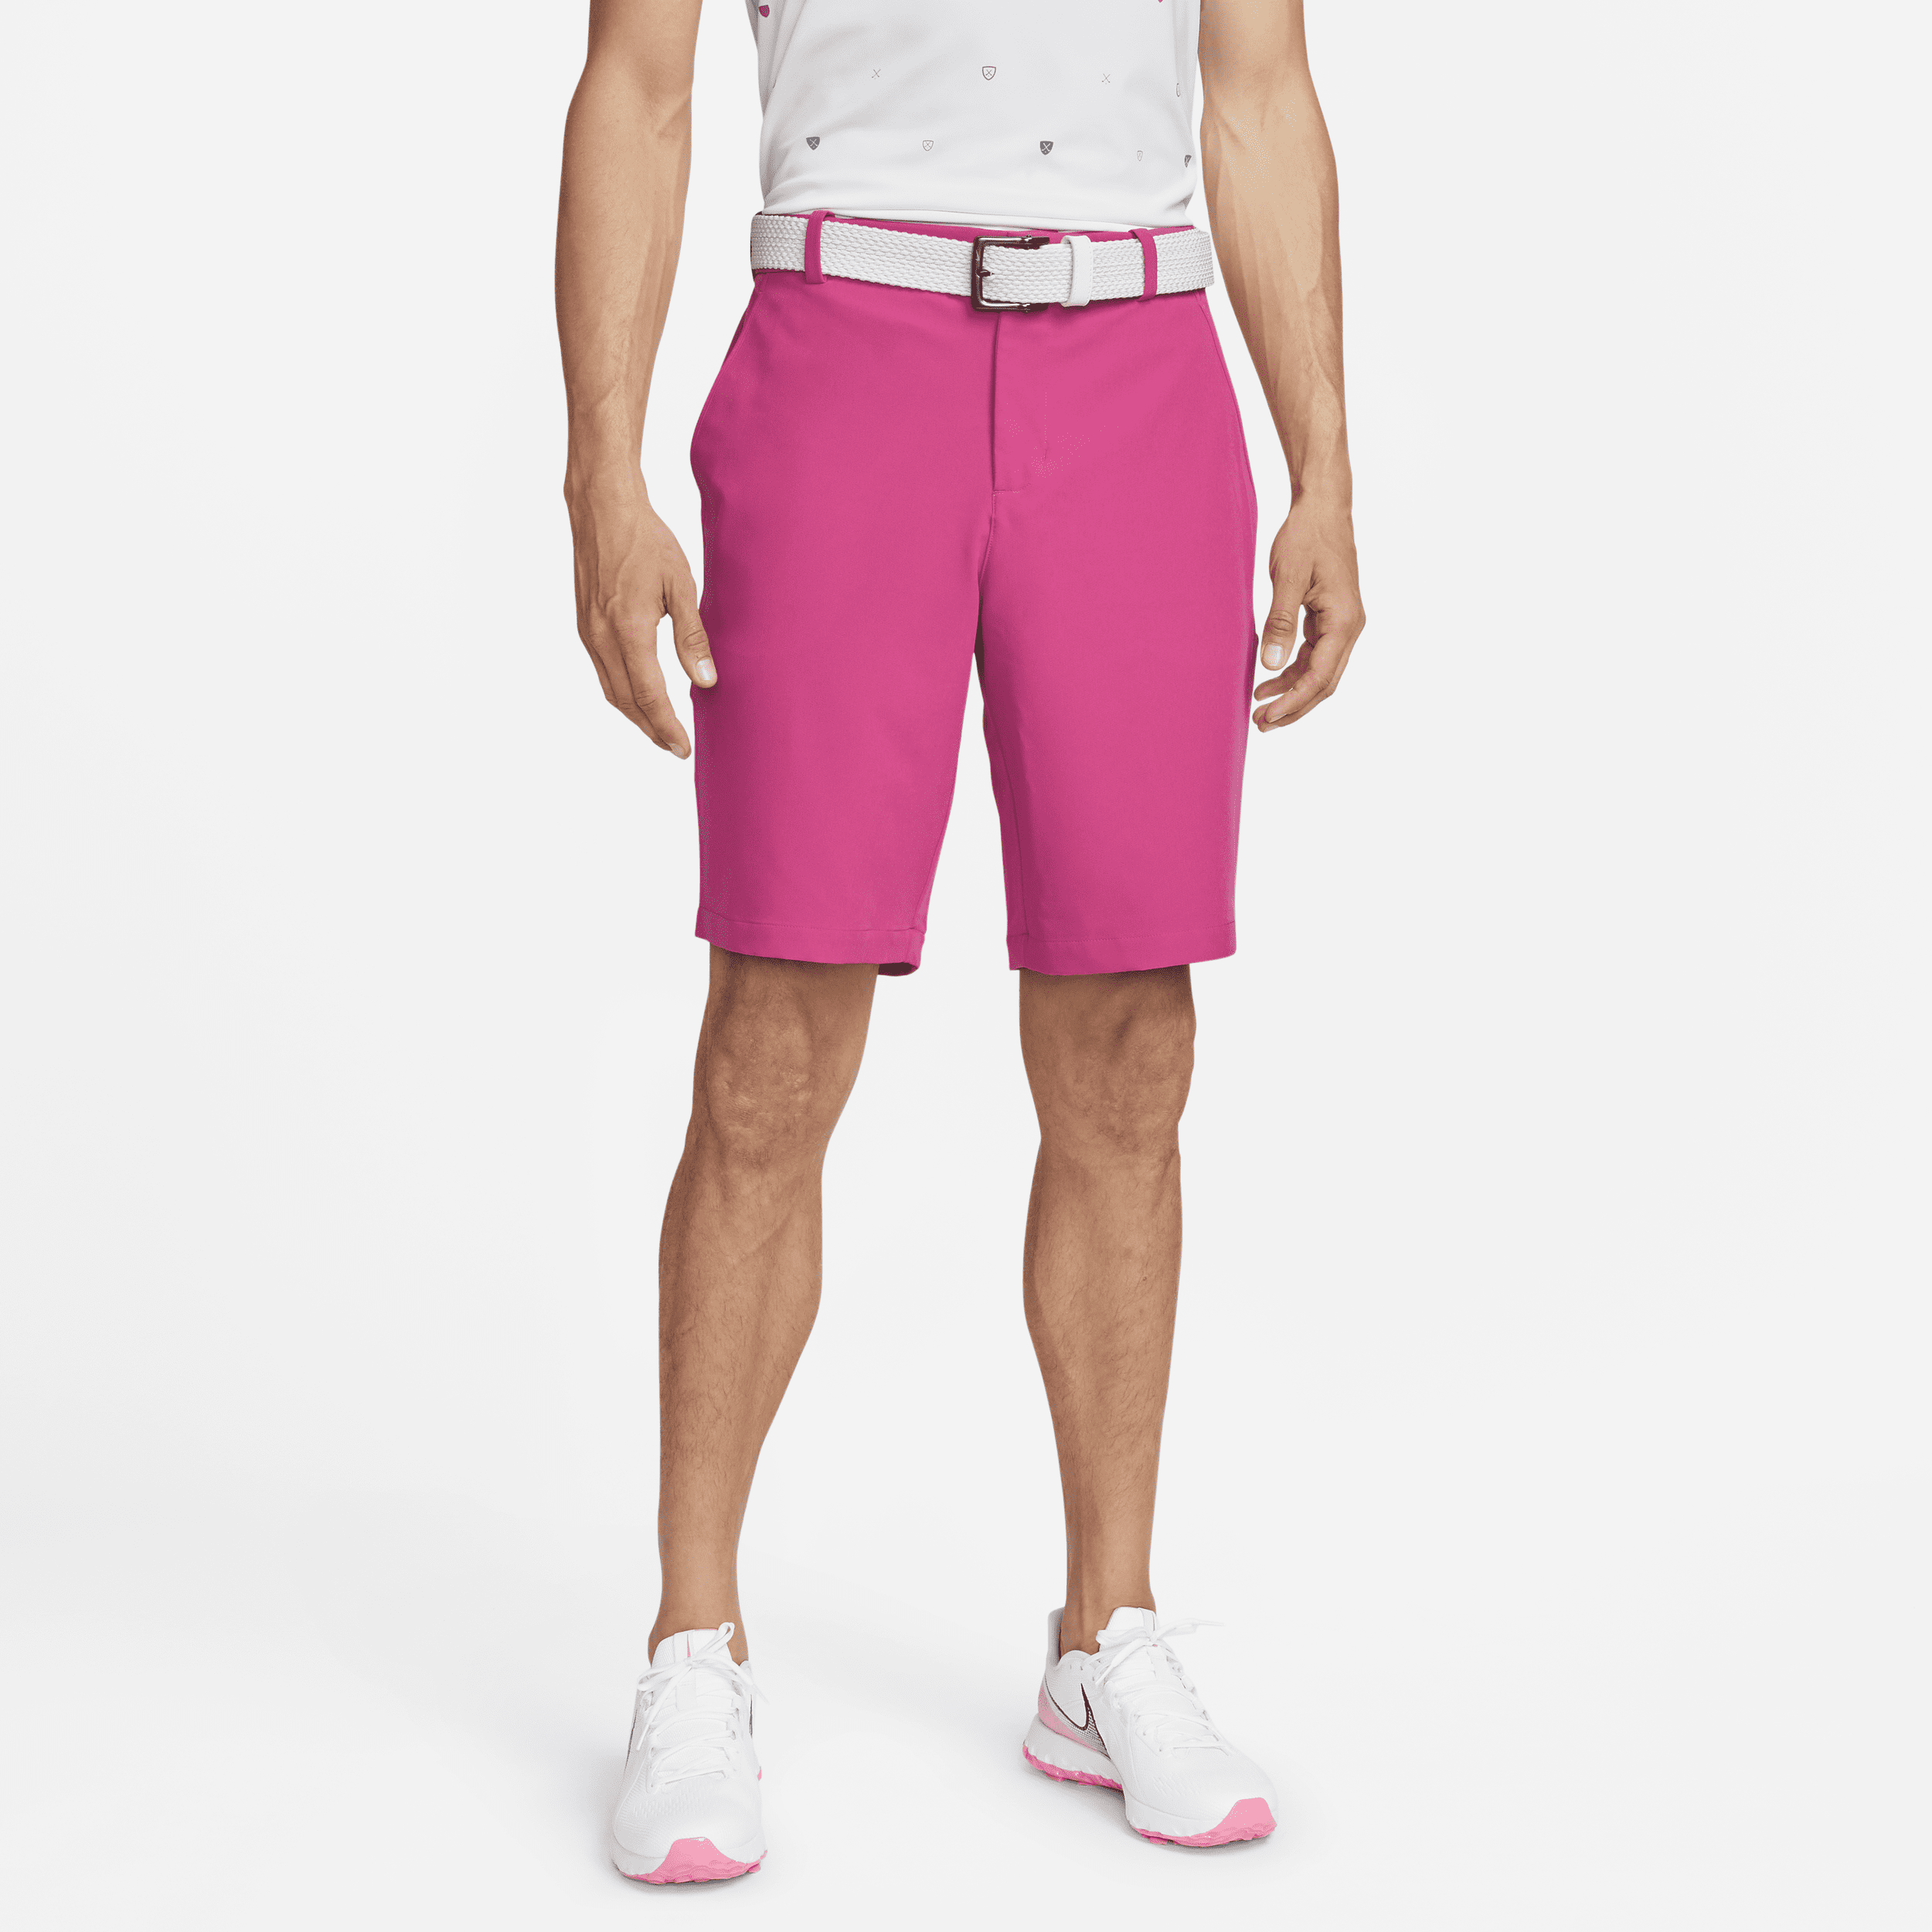 Nike Men's Dri-fit Golf Shorts In Pink